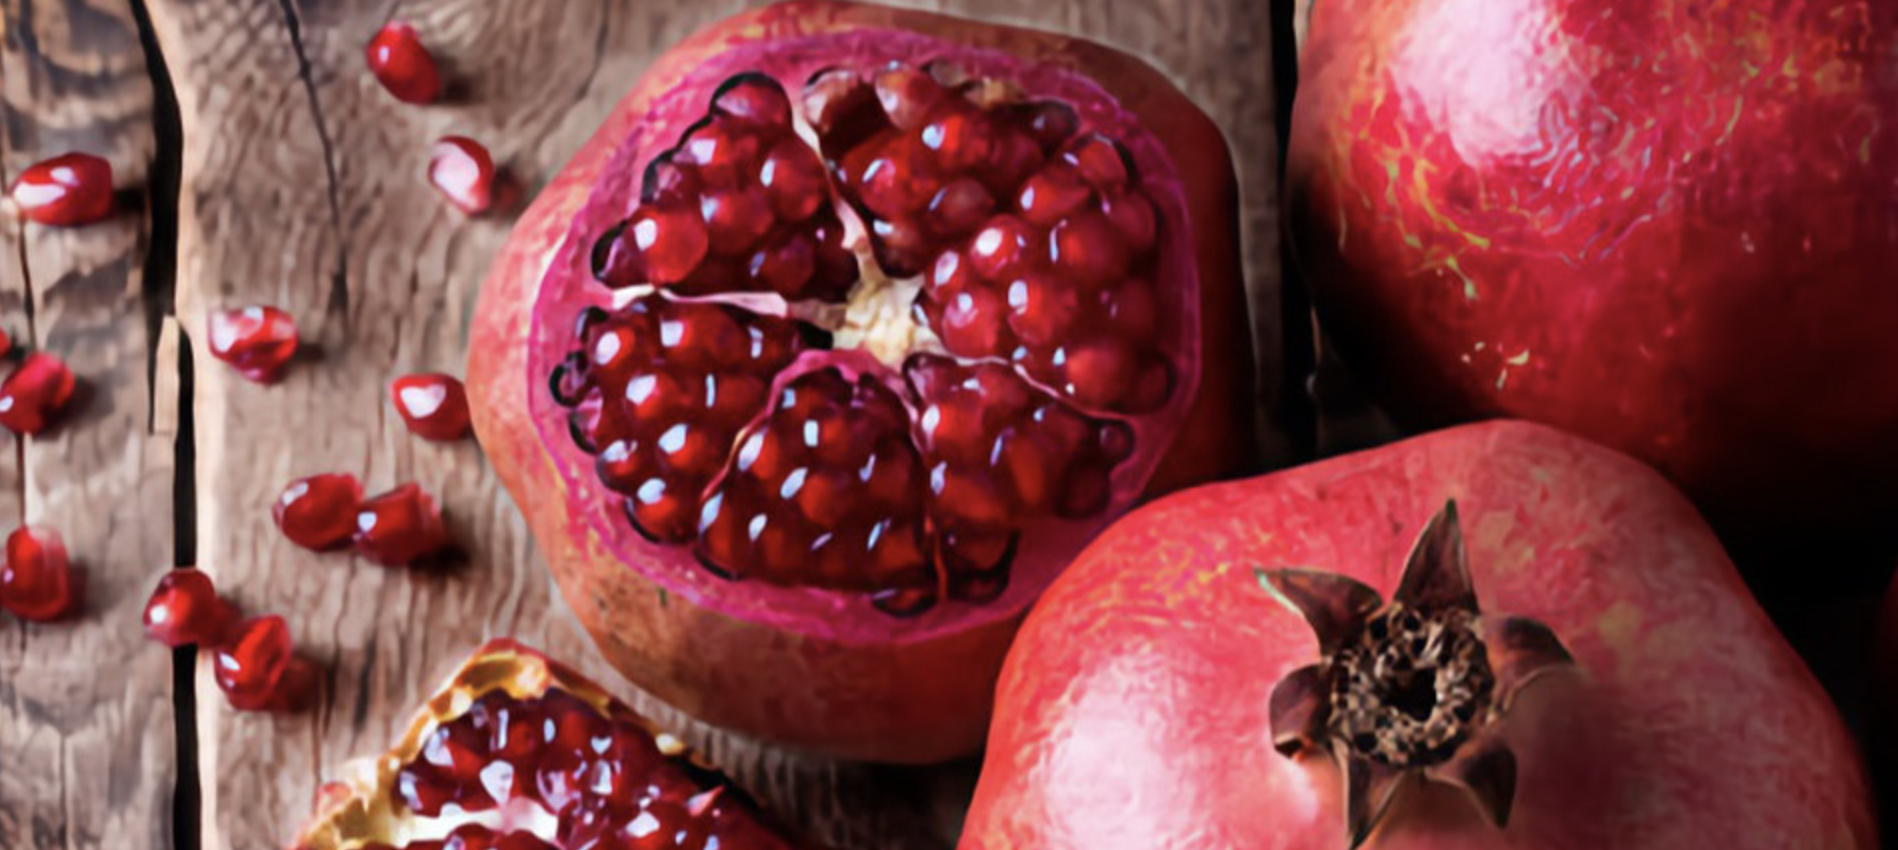 6 Health Benefits of Pomegranate